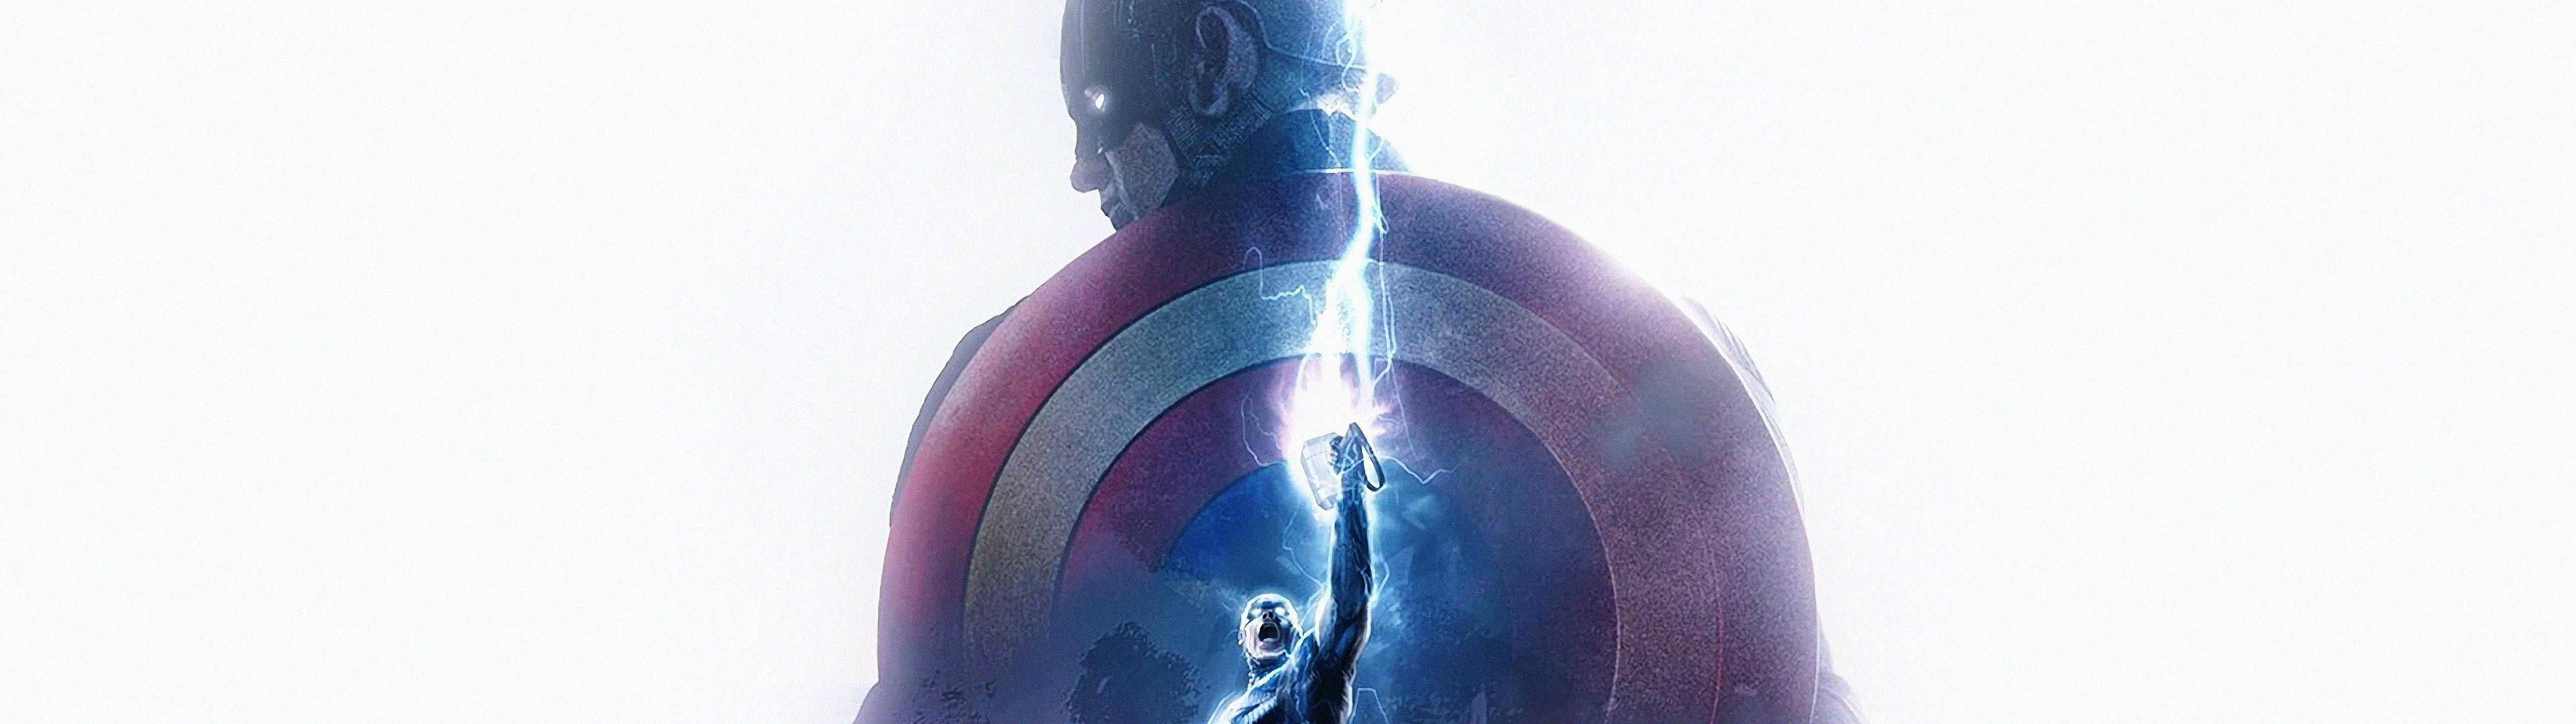 Marvel's Captain America With Mjolnir 5120 X 1440